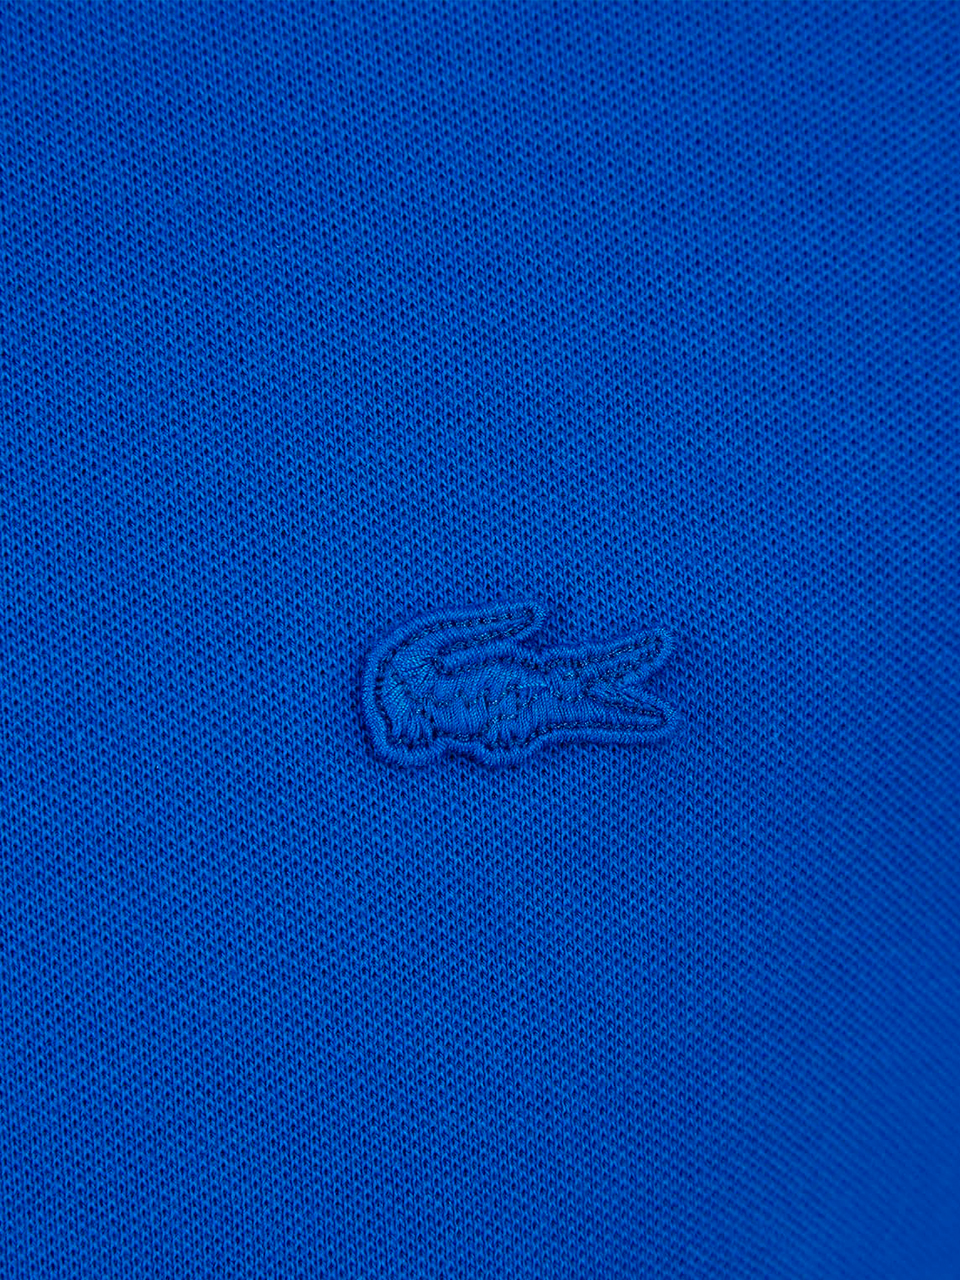 Imagem de: Camisa Polo Lacoste Azul Royal